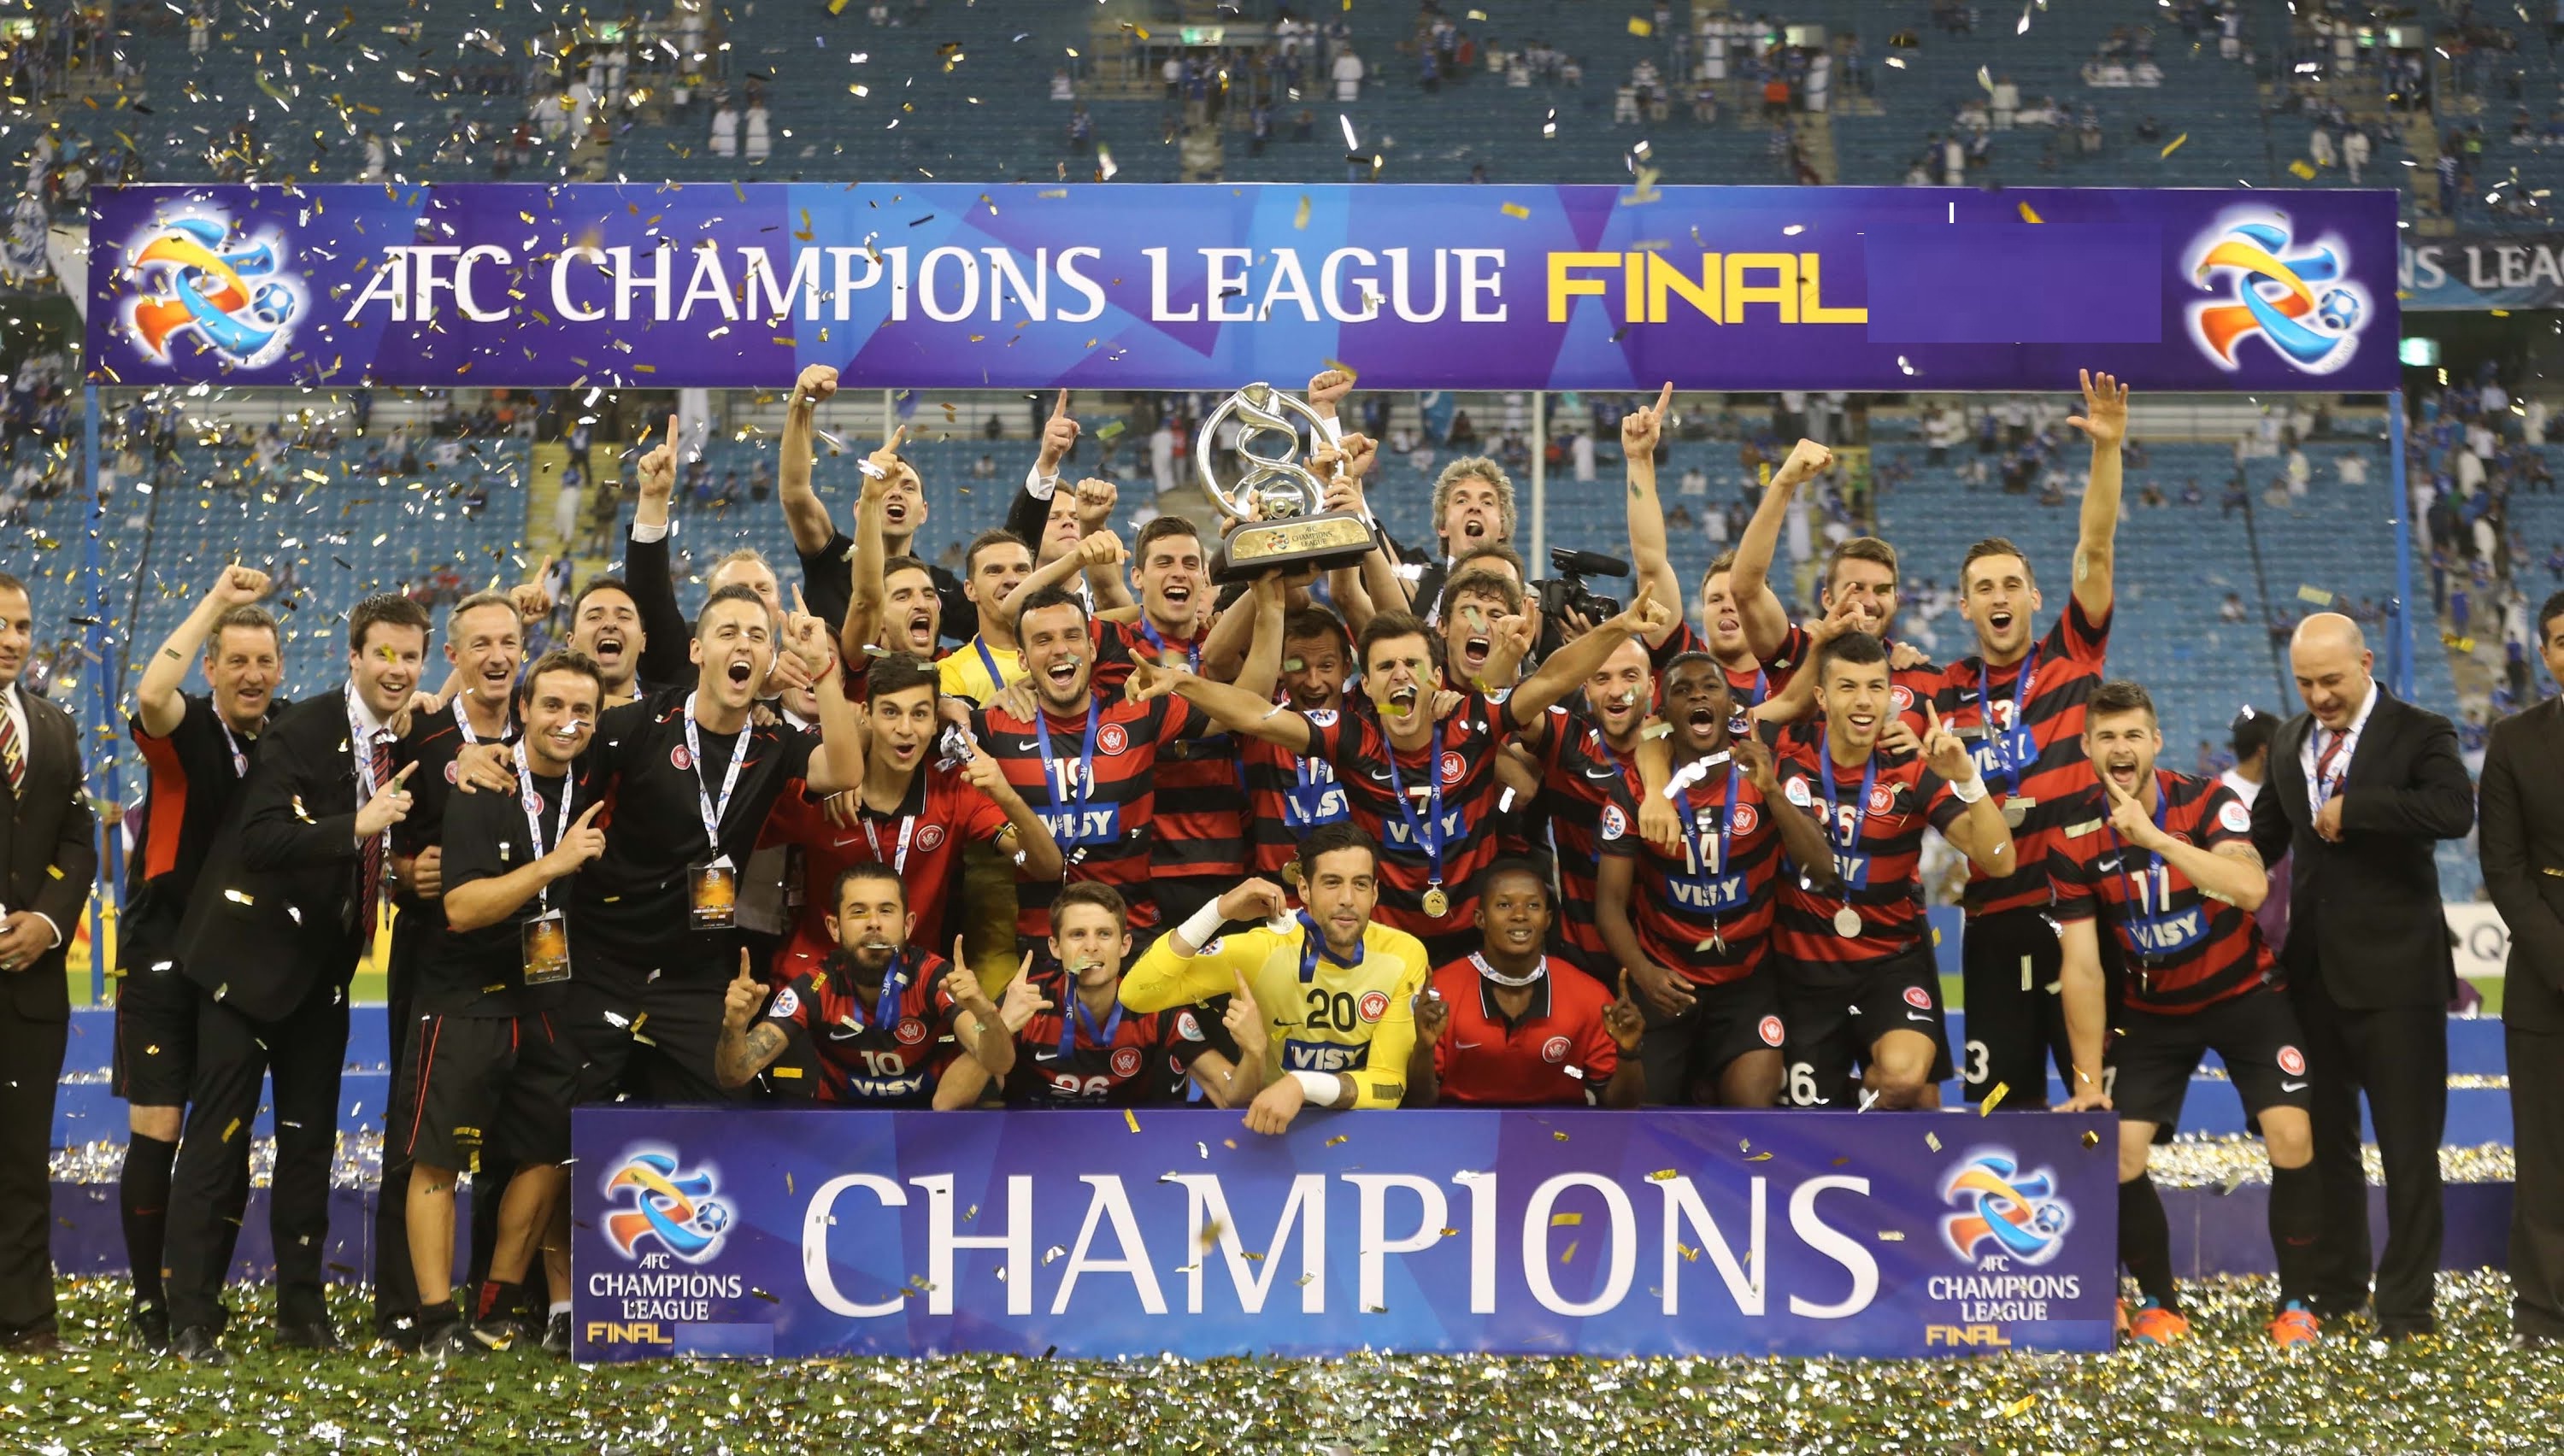 AFC Asian Champions League